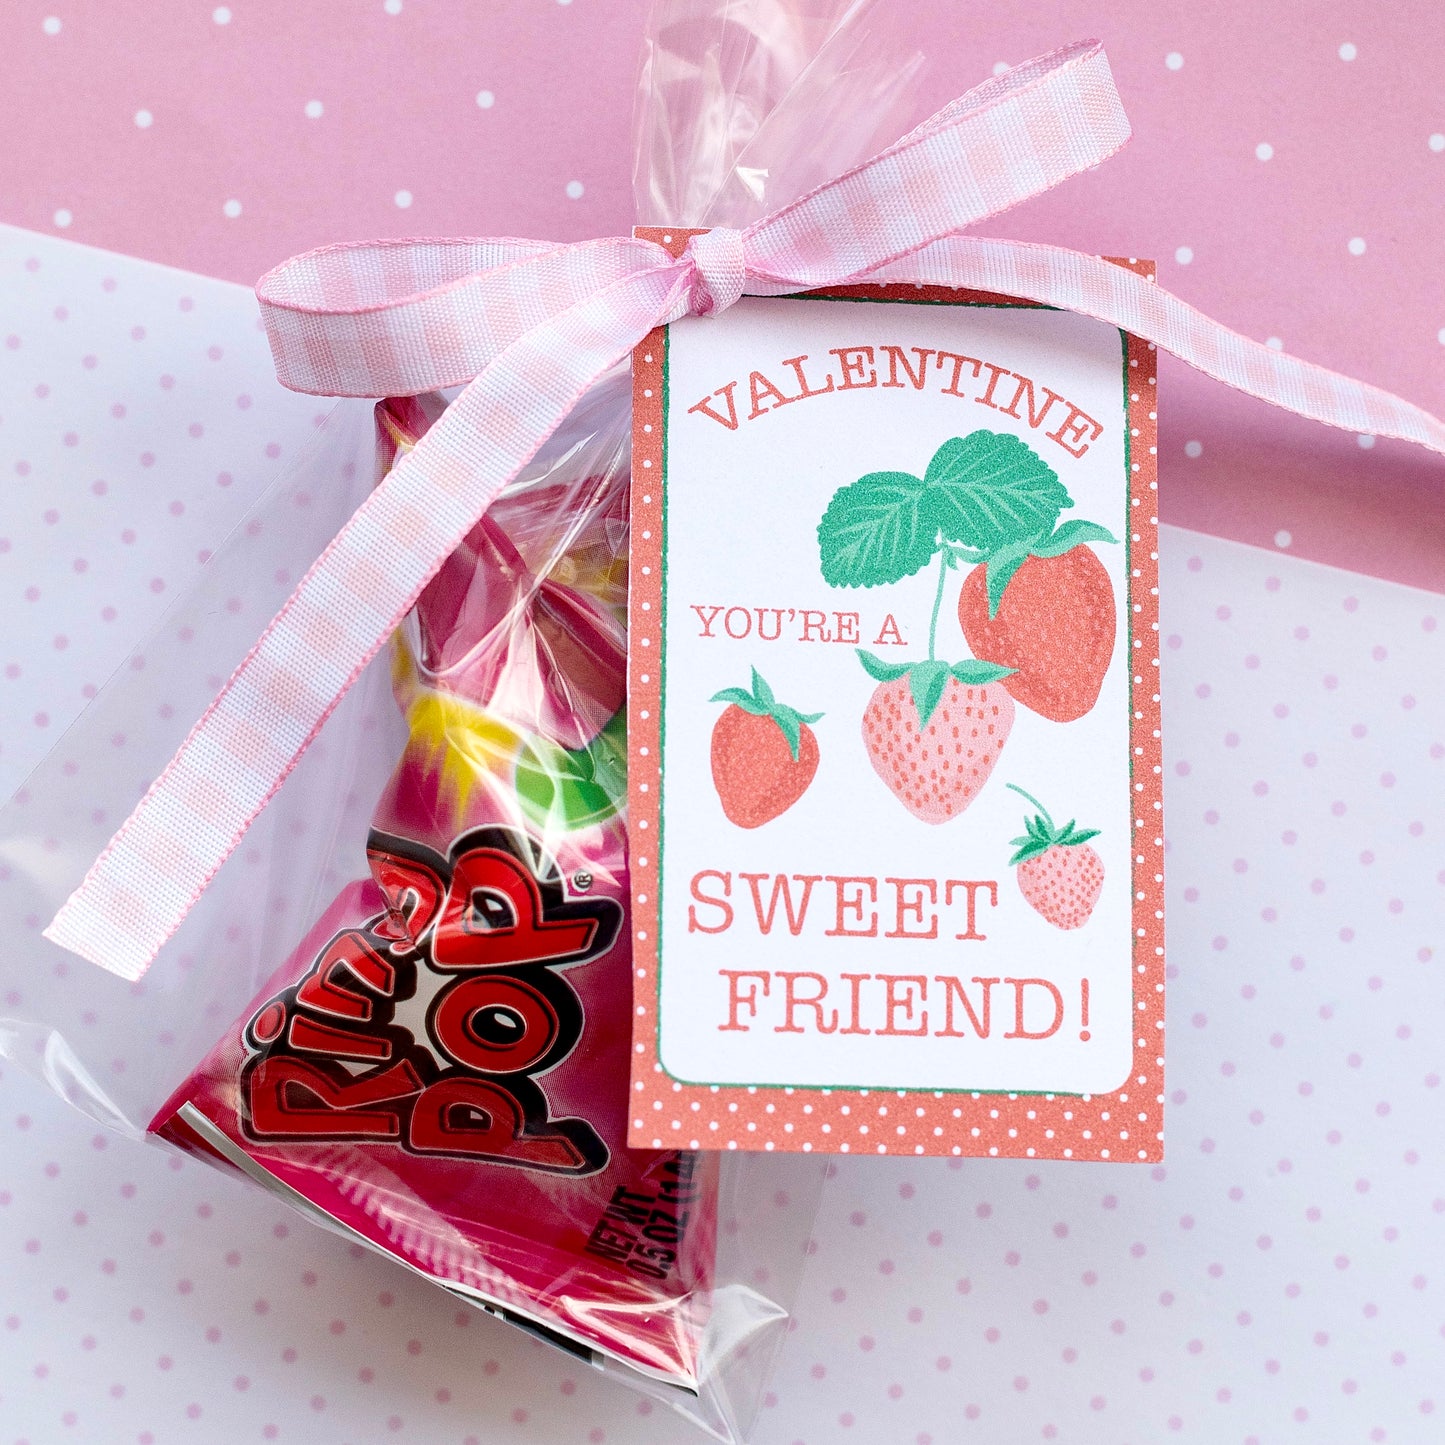 Strawberry VDay Cards